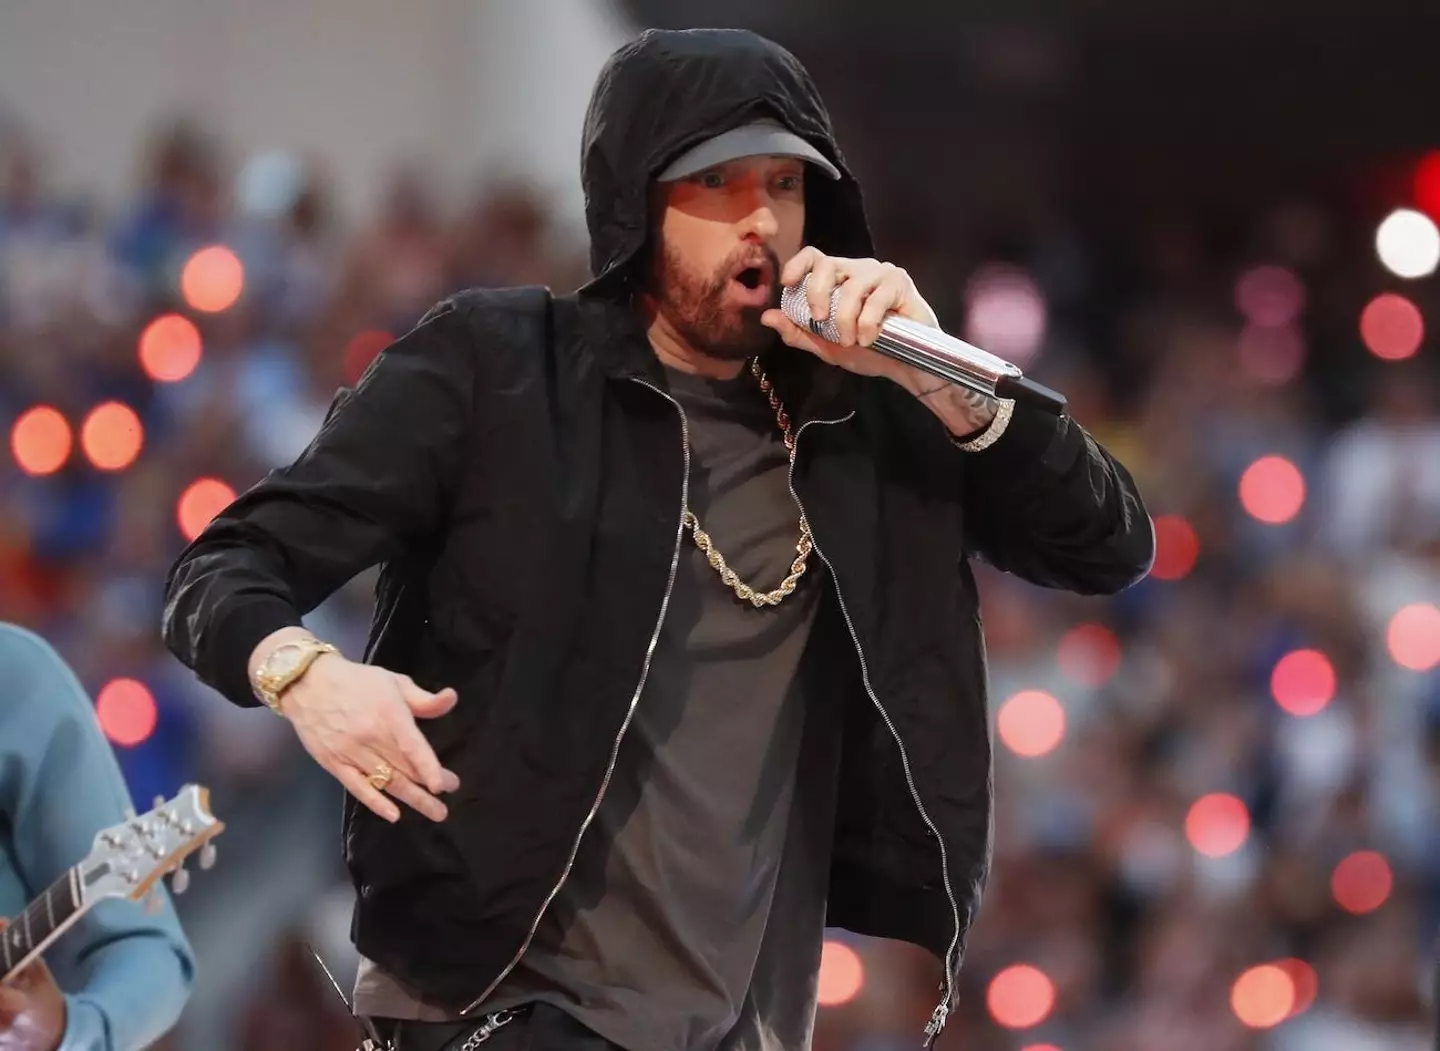 Eminem performing at the Pepsi Super Bowl LVI Halftime Show earlier this year.